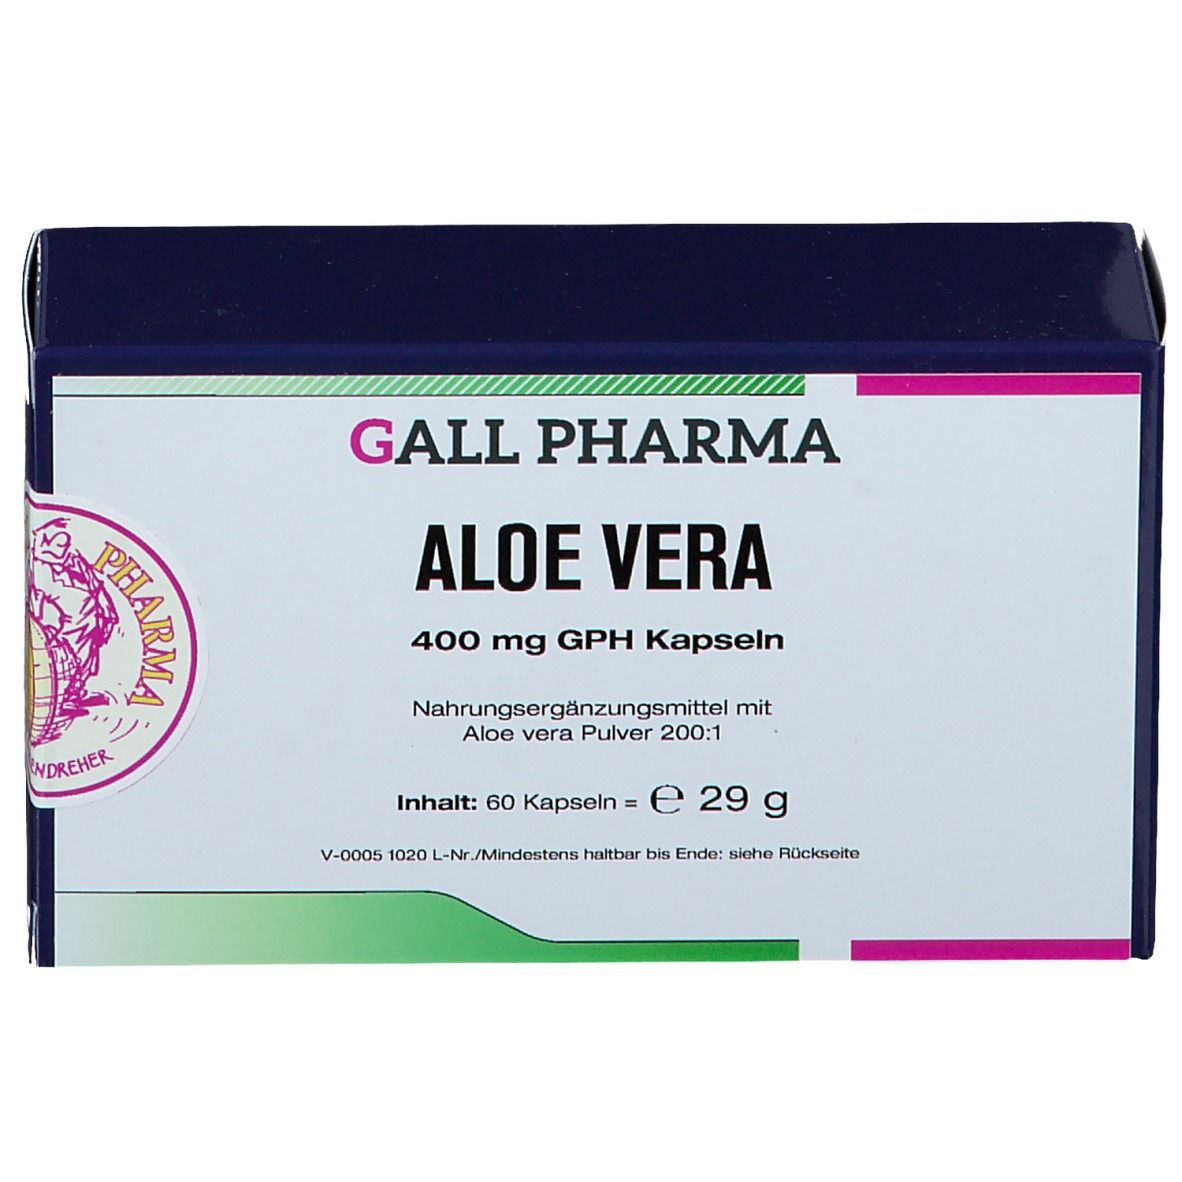 GALL PHARMA Aloe Vera 400 mg GPH Kapseln